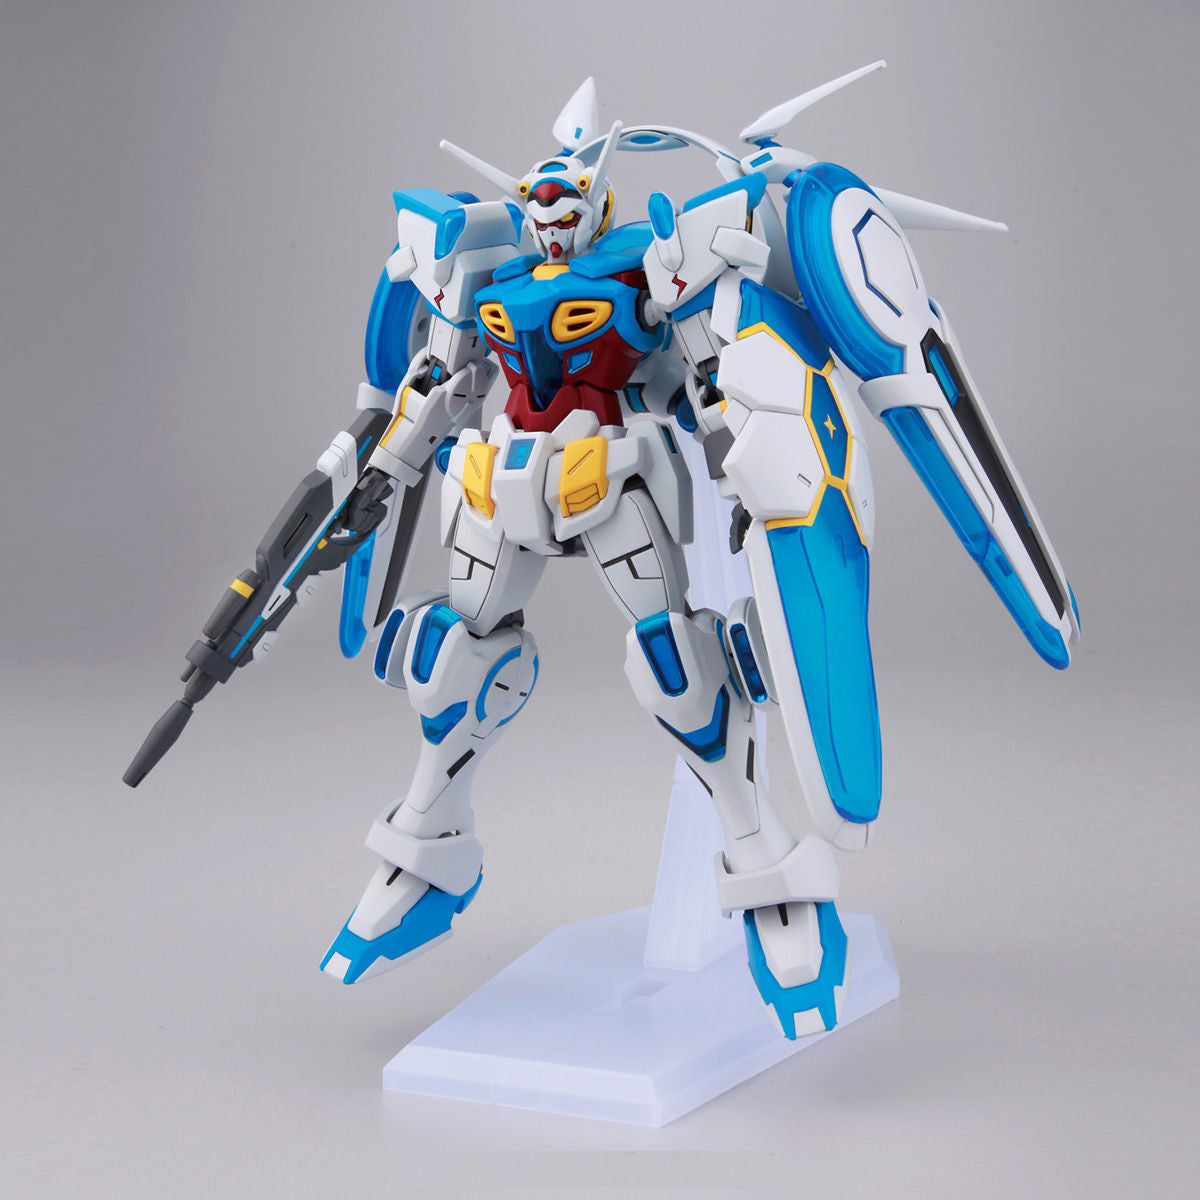 GUNDAM - HG 1/144 - Gundam G-Self Perfect Pack - Model Kit